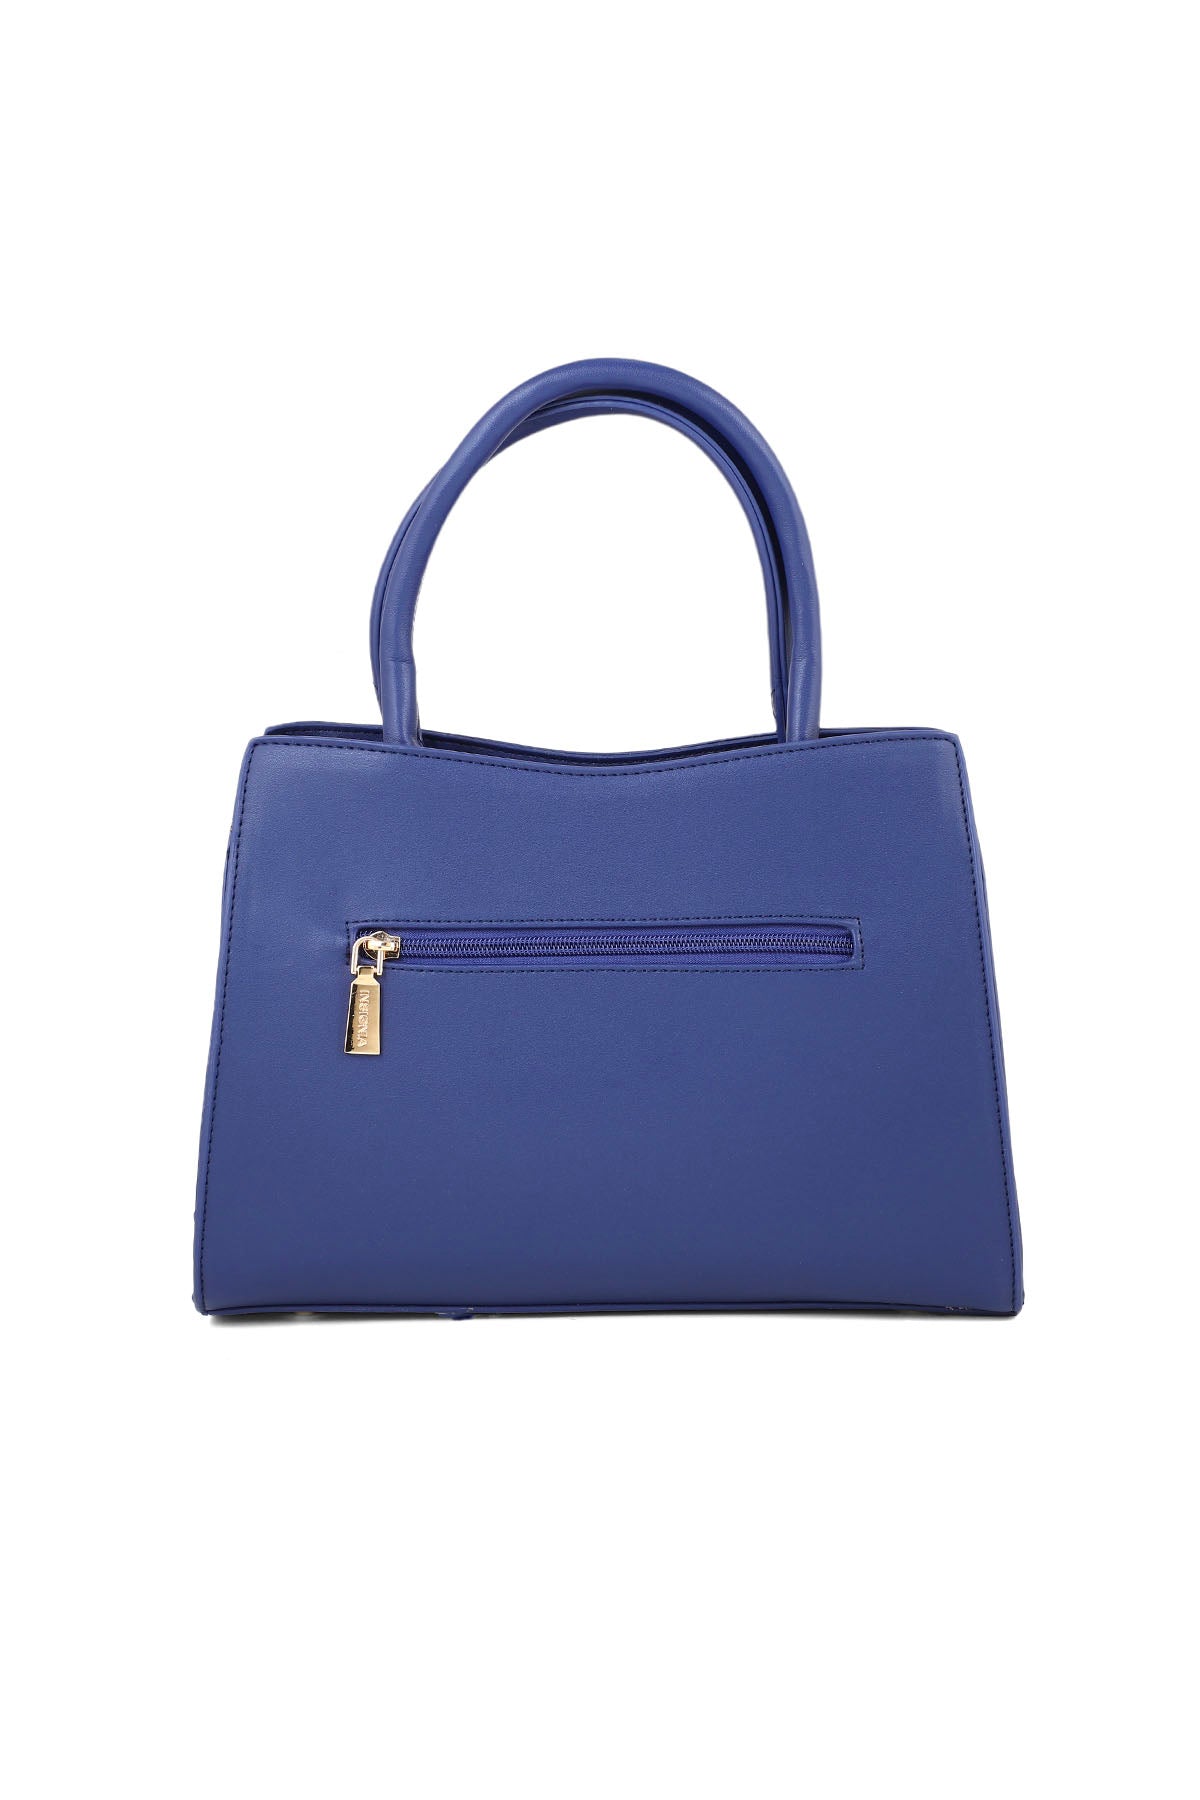 Top Handle Hand Bags B15132-Blue